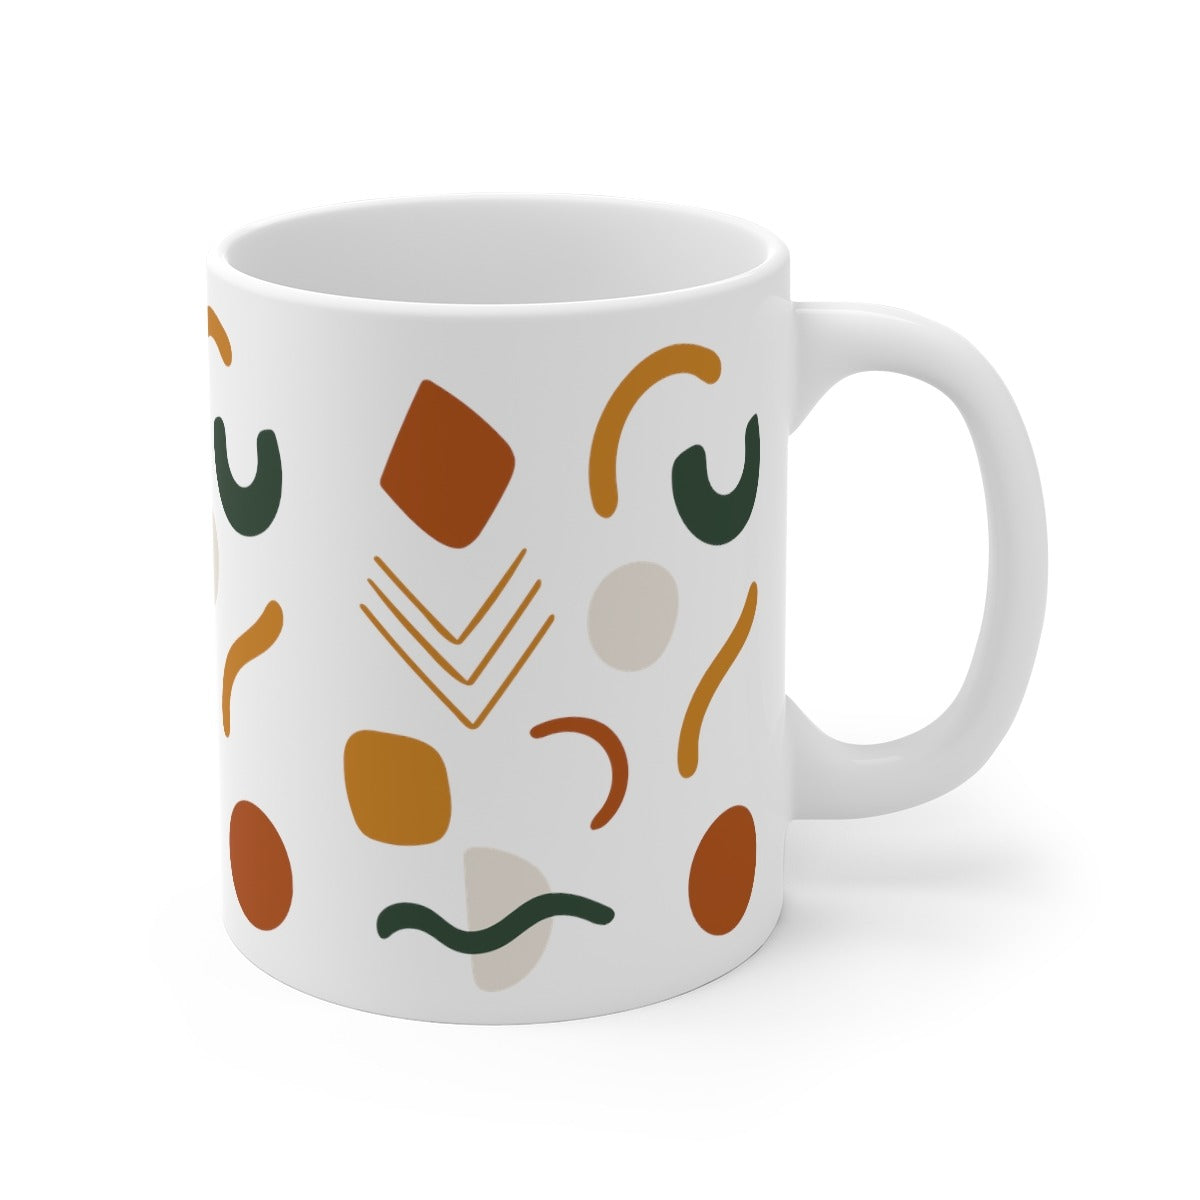 Abstract Pattern Printed Coffee Mug